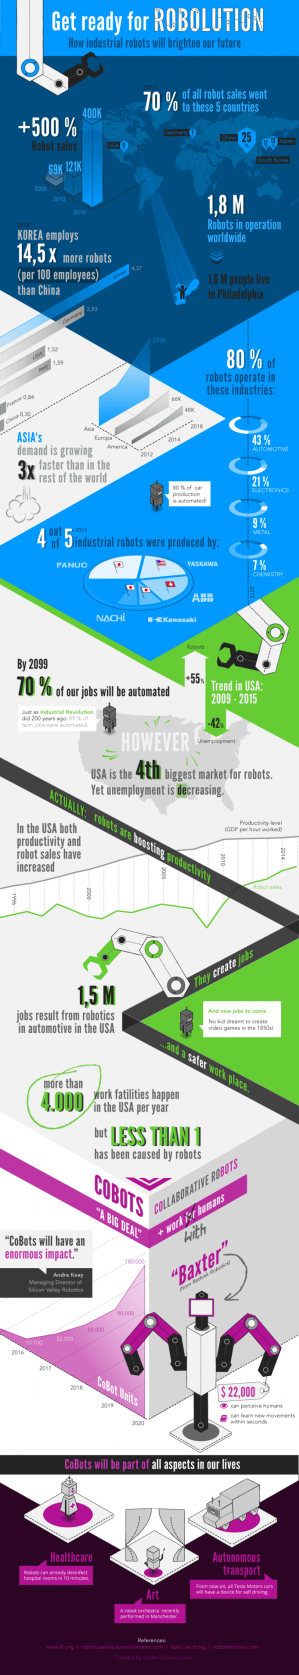 Get Ready For Robolution infographic